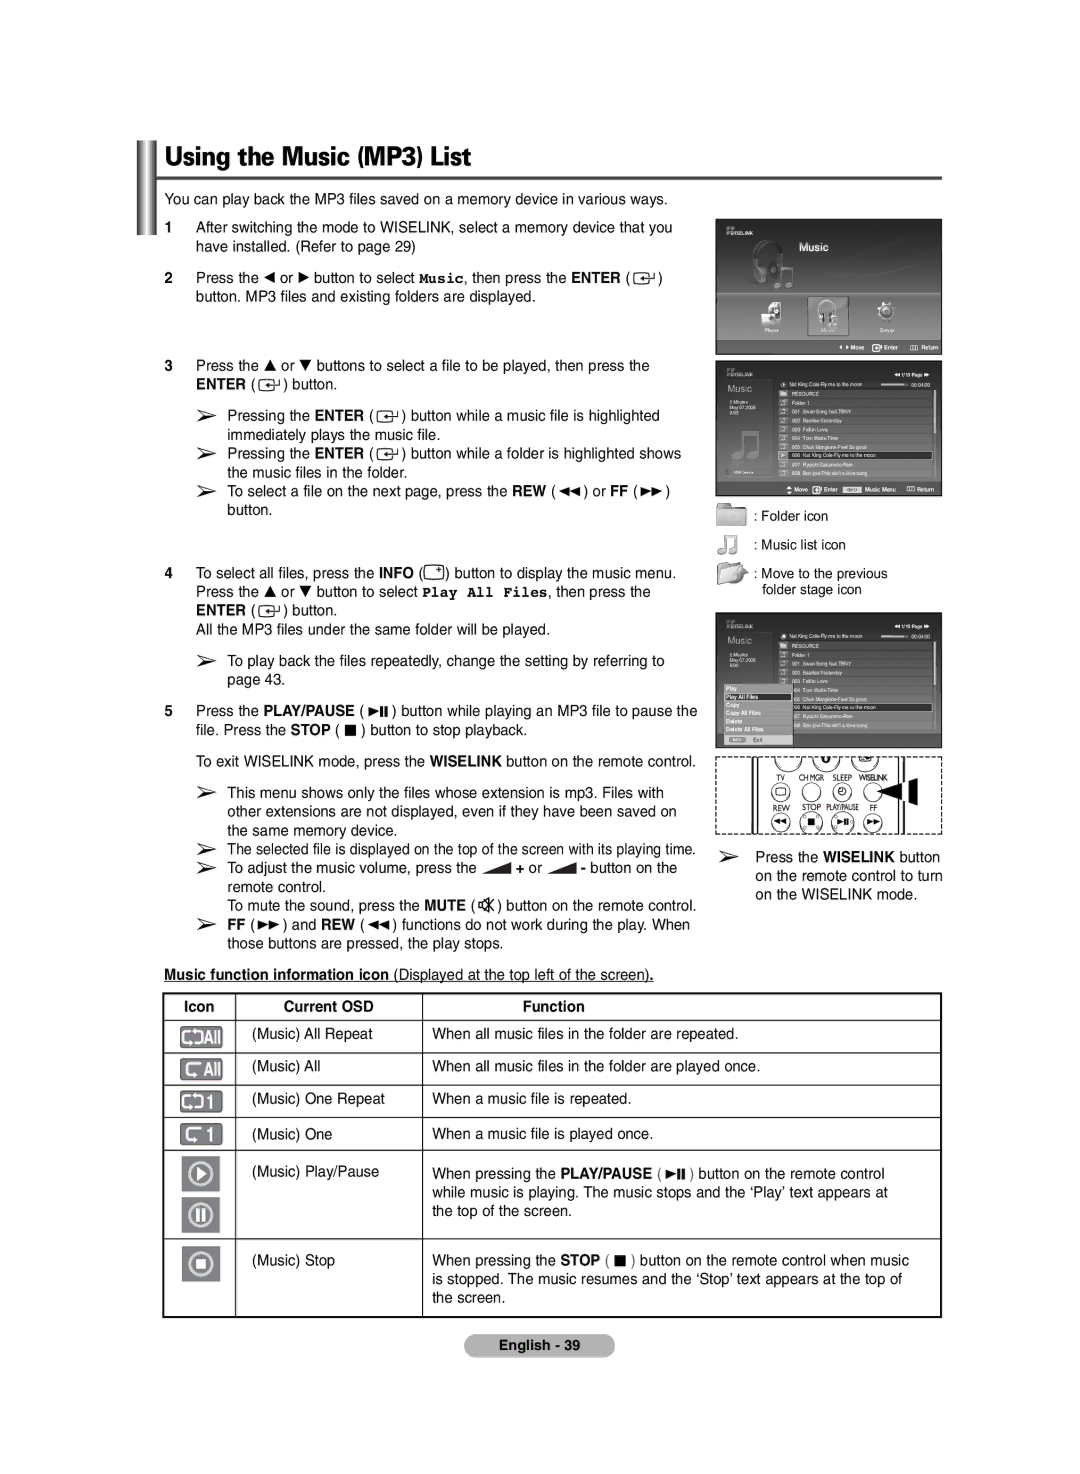 Samsung BN68-00990V-03 manual Using the Music MP3 List, Folder icon Music list icon 